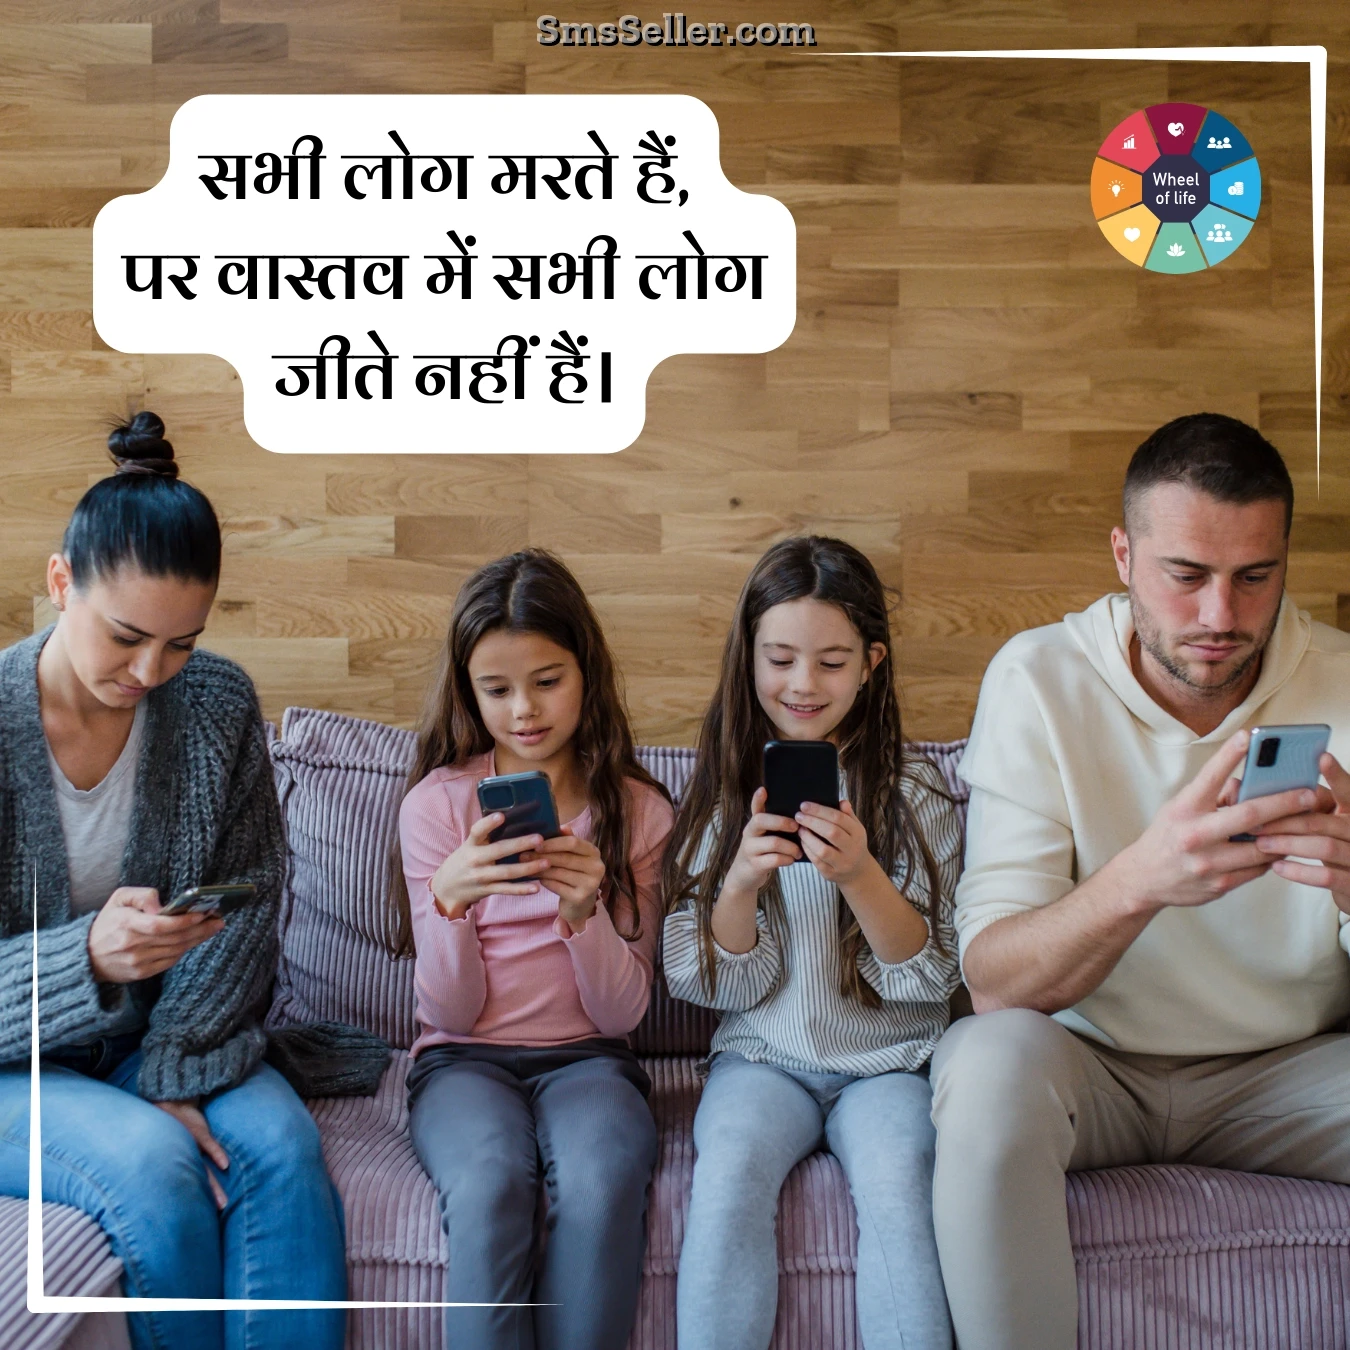 life quotes in hindi sabhi log maut zindagi sachai